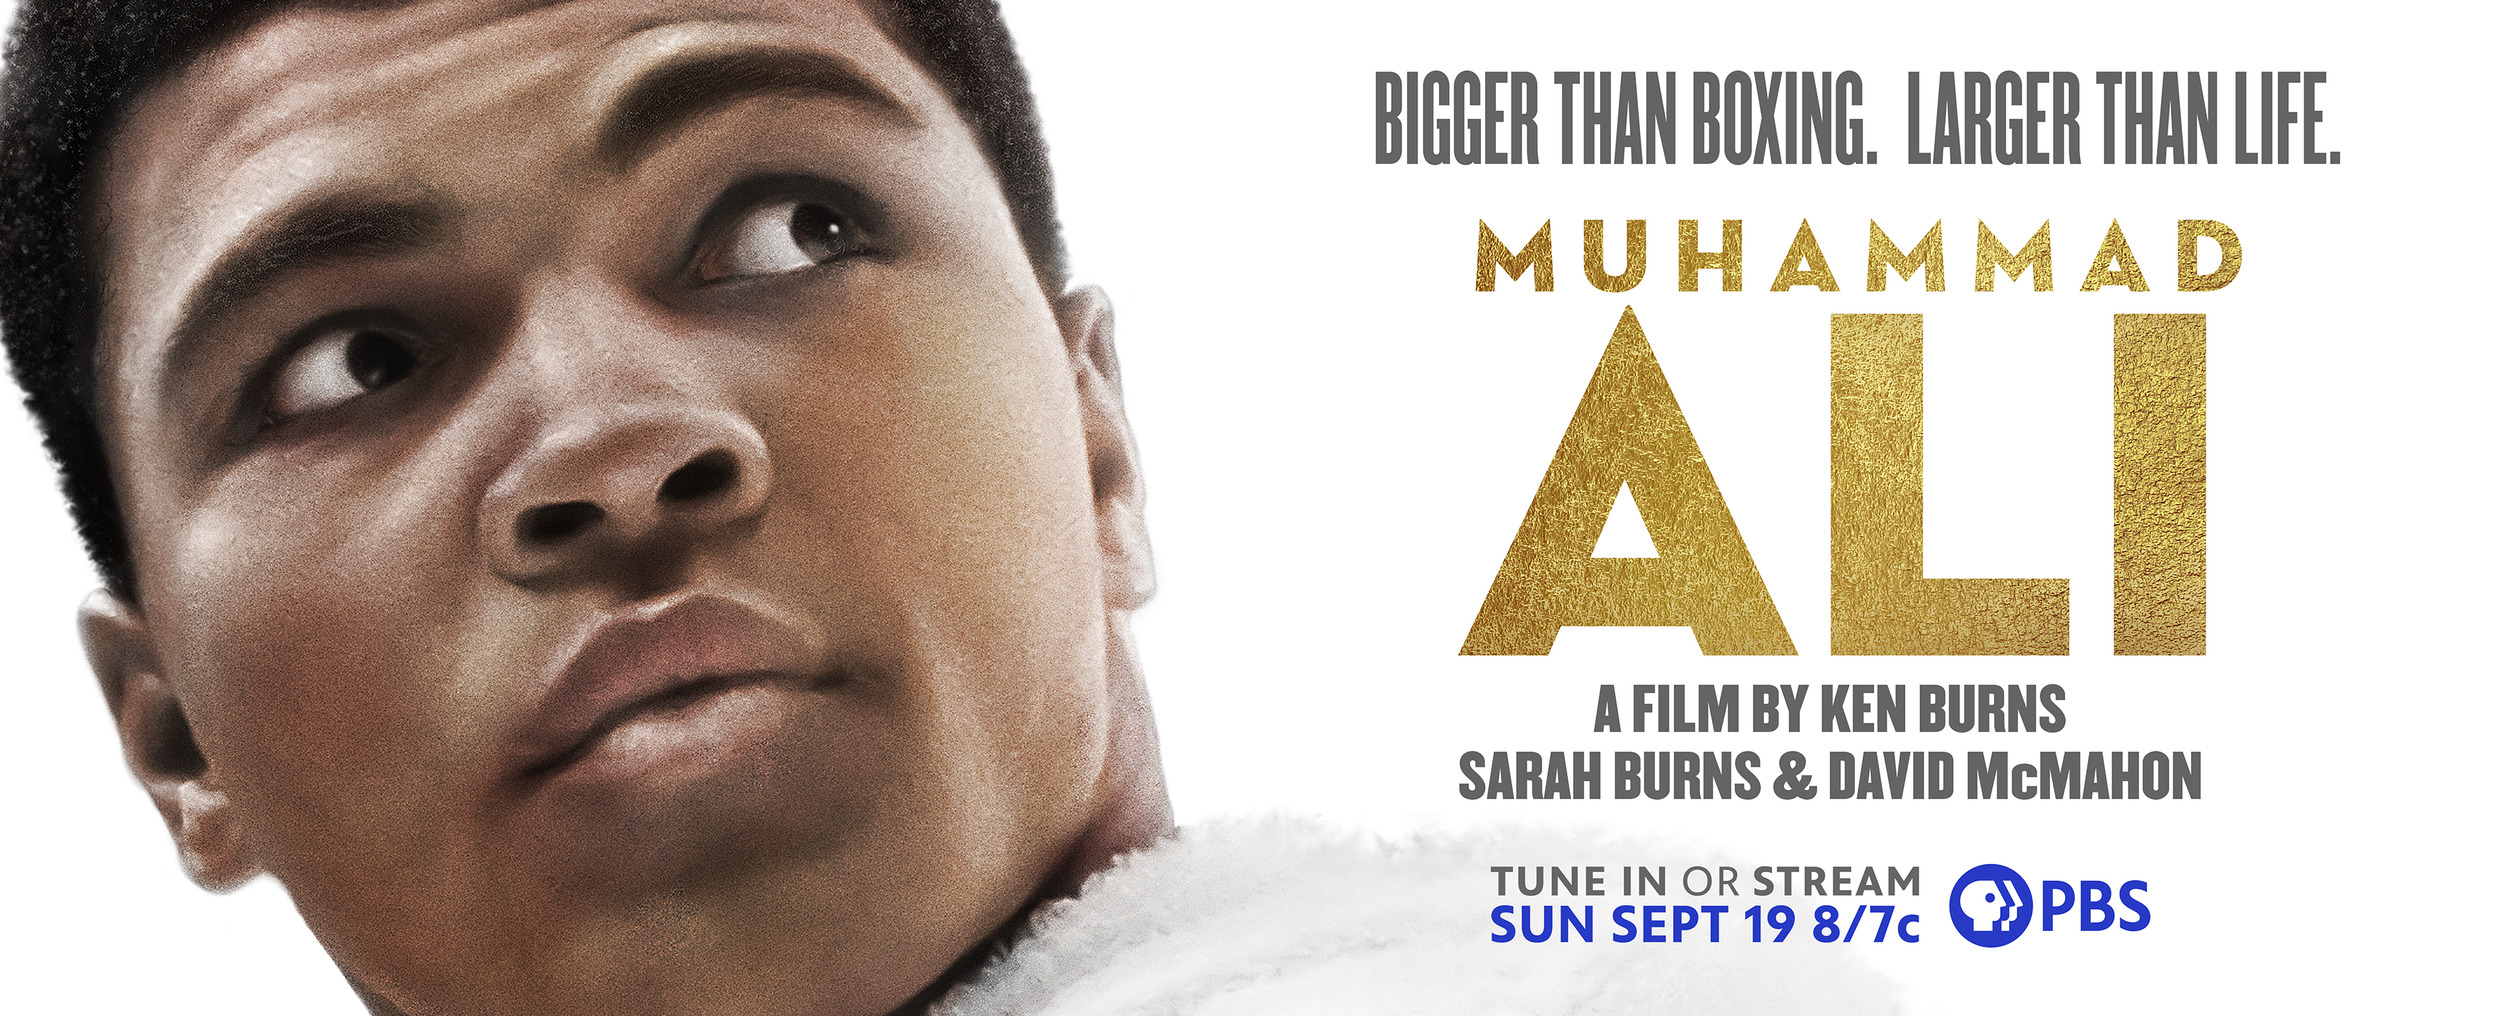 Mega Sized TV Poster Image for Muhammad Ali (#2 of 2)